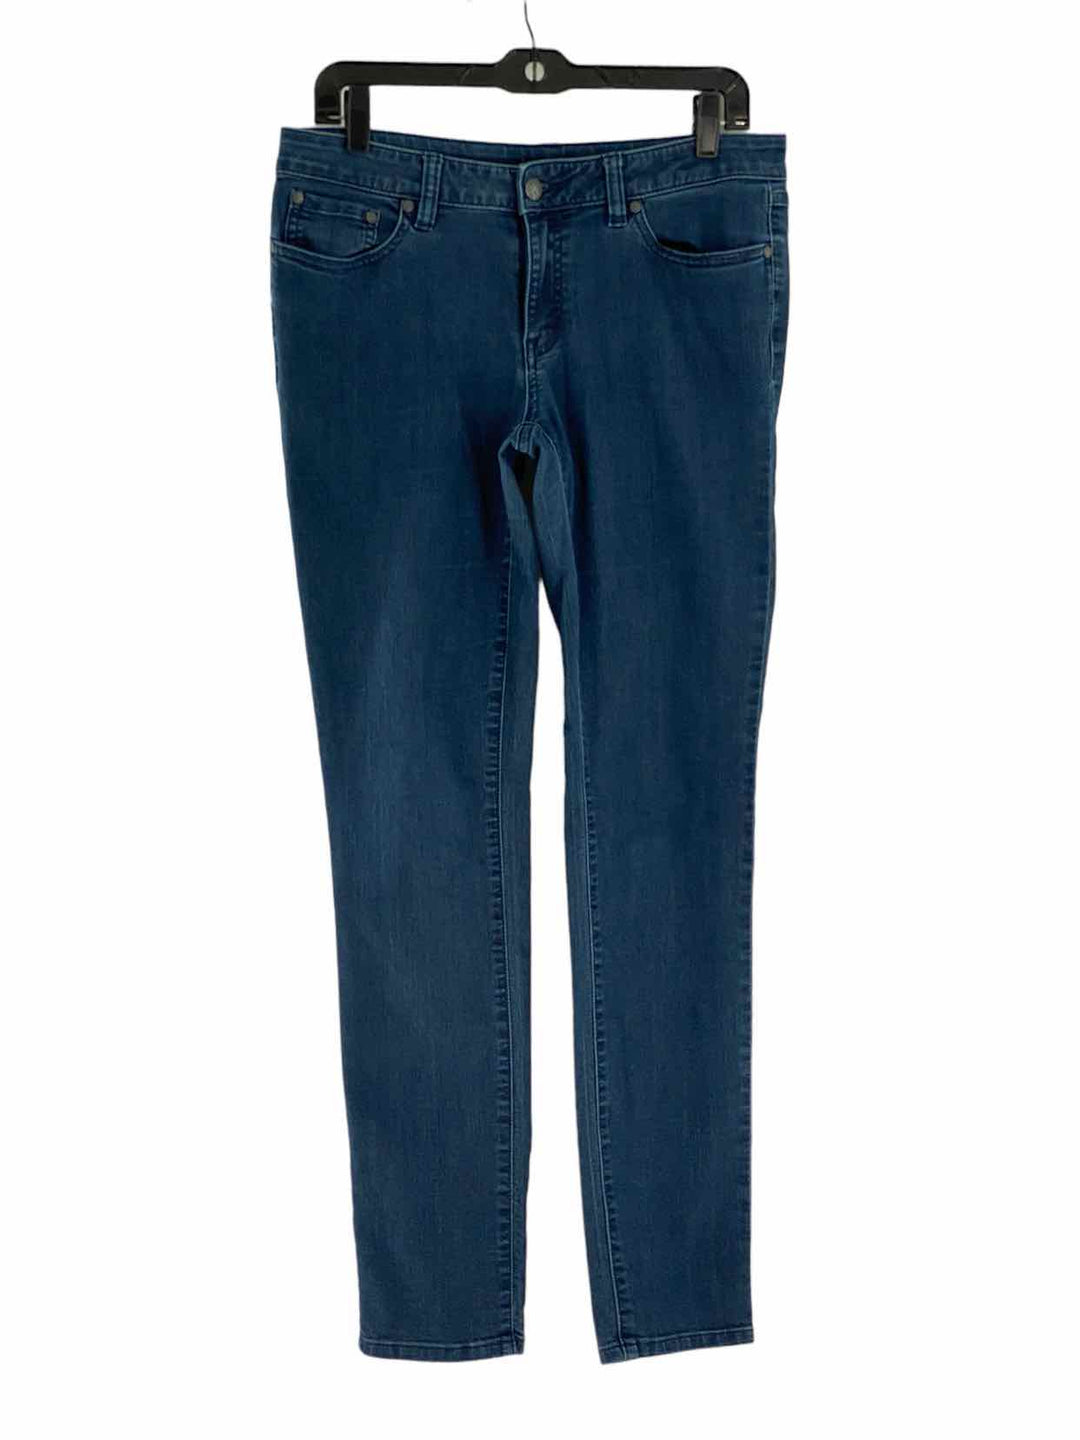 PrAna Size 8/29 Jeans